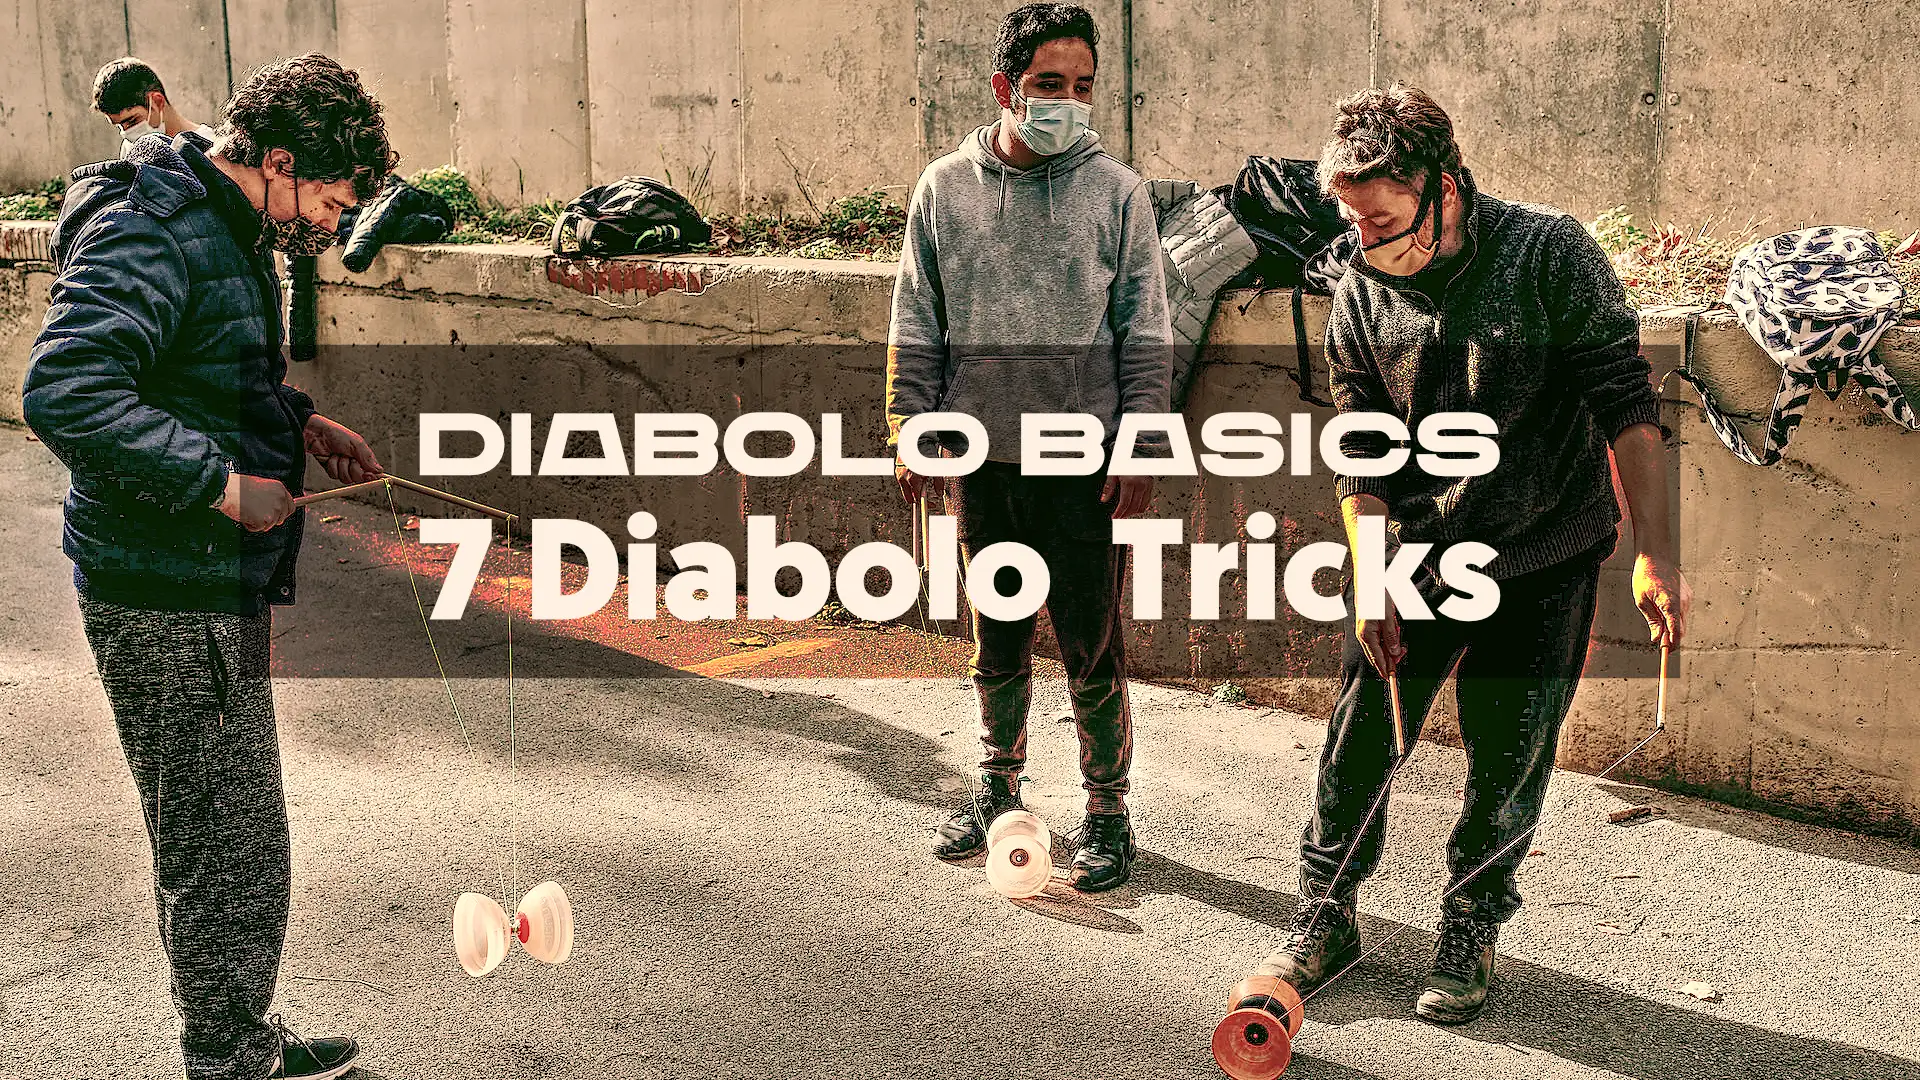 Essential 7 Diabolo Tricks for Beginners - Blog - troposfera.xyz by Dídac Gilabert LQ